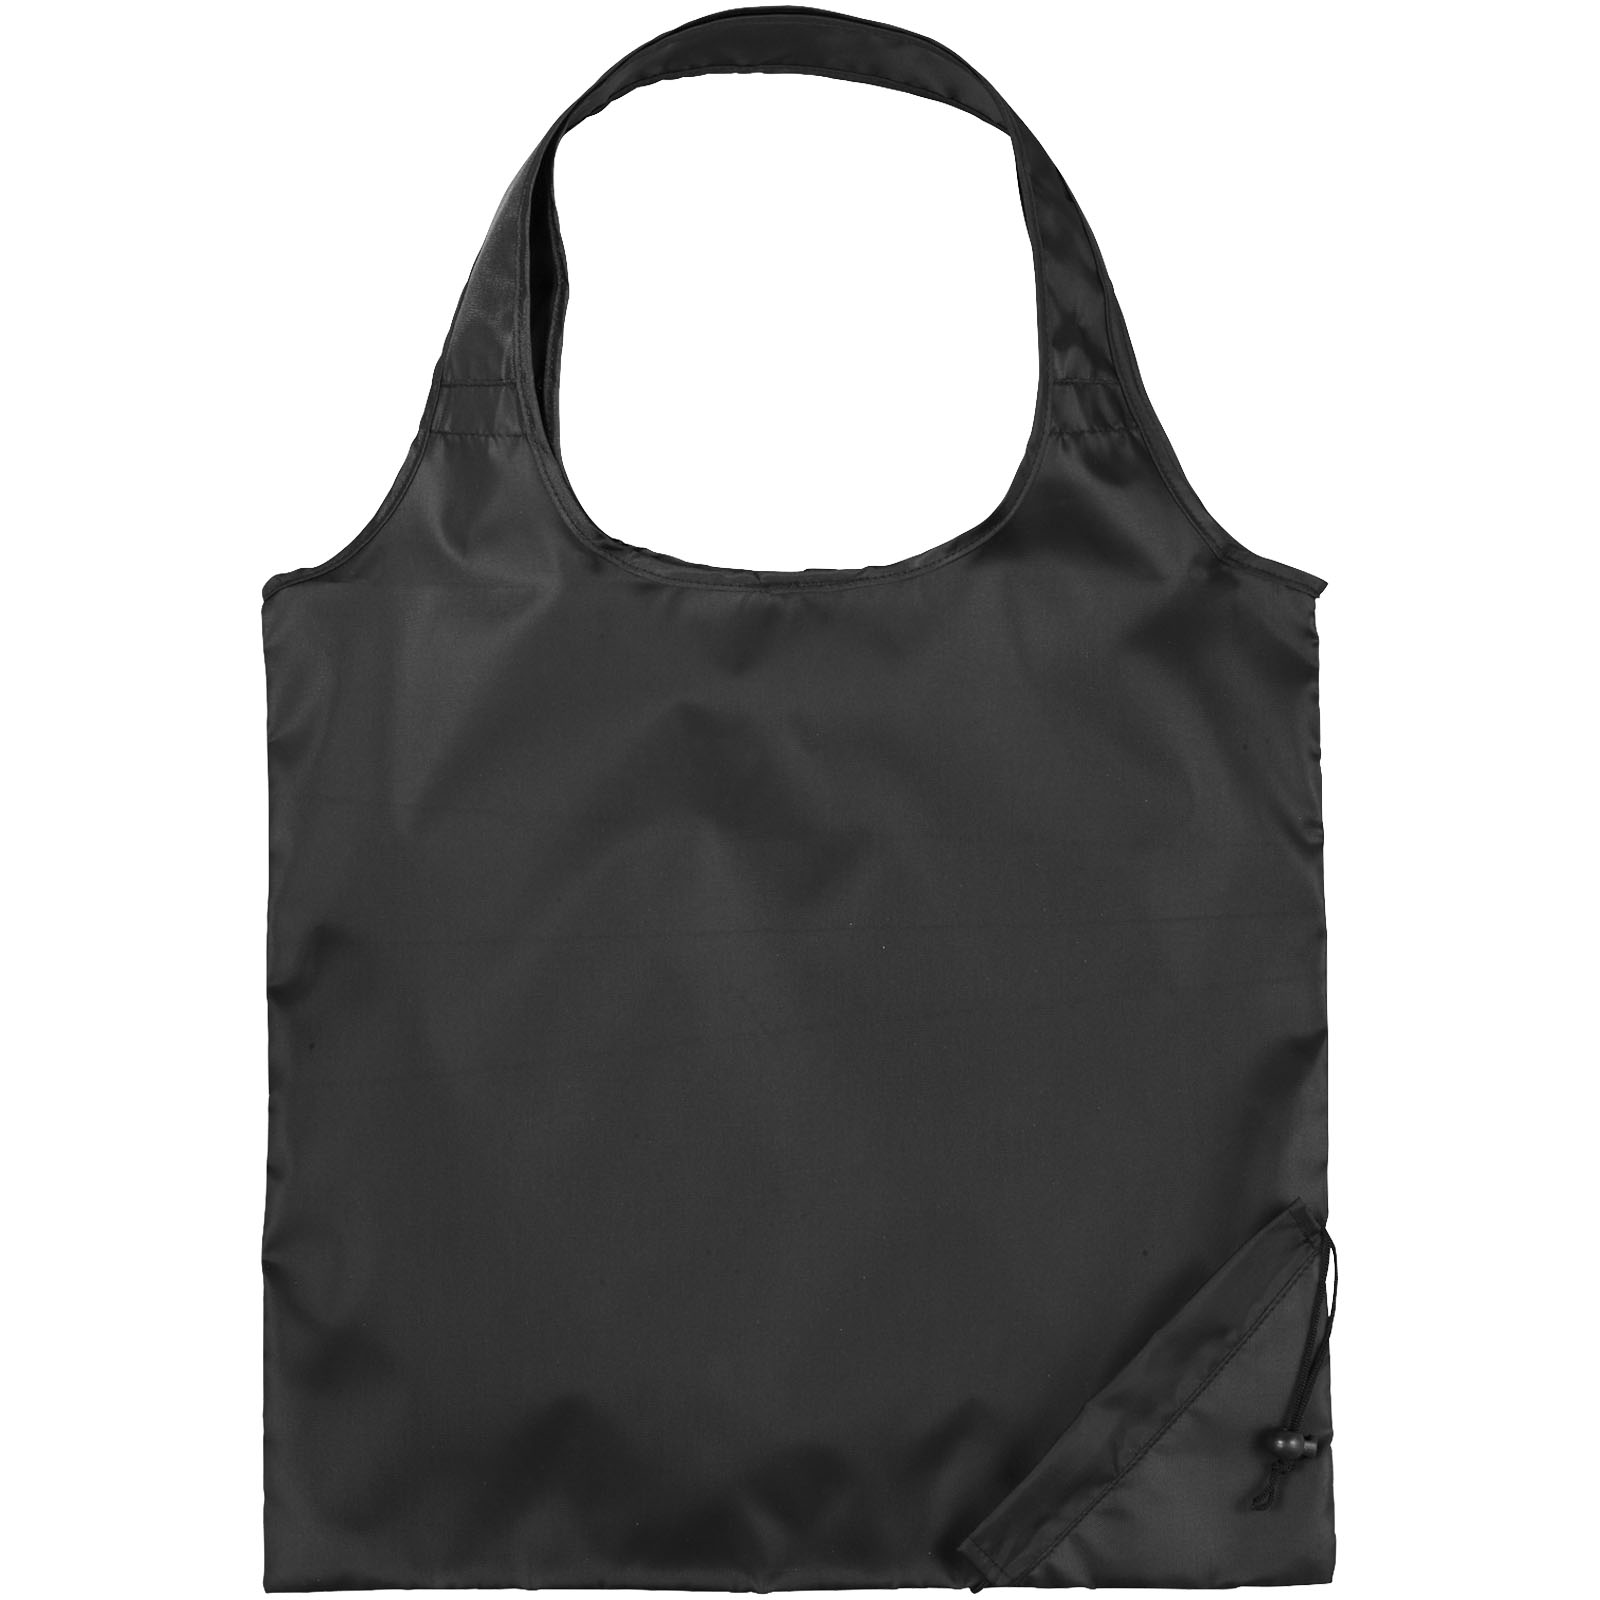 Bags - Bungalow foldable tote bag 7L